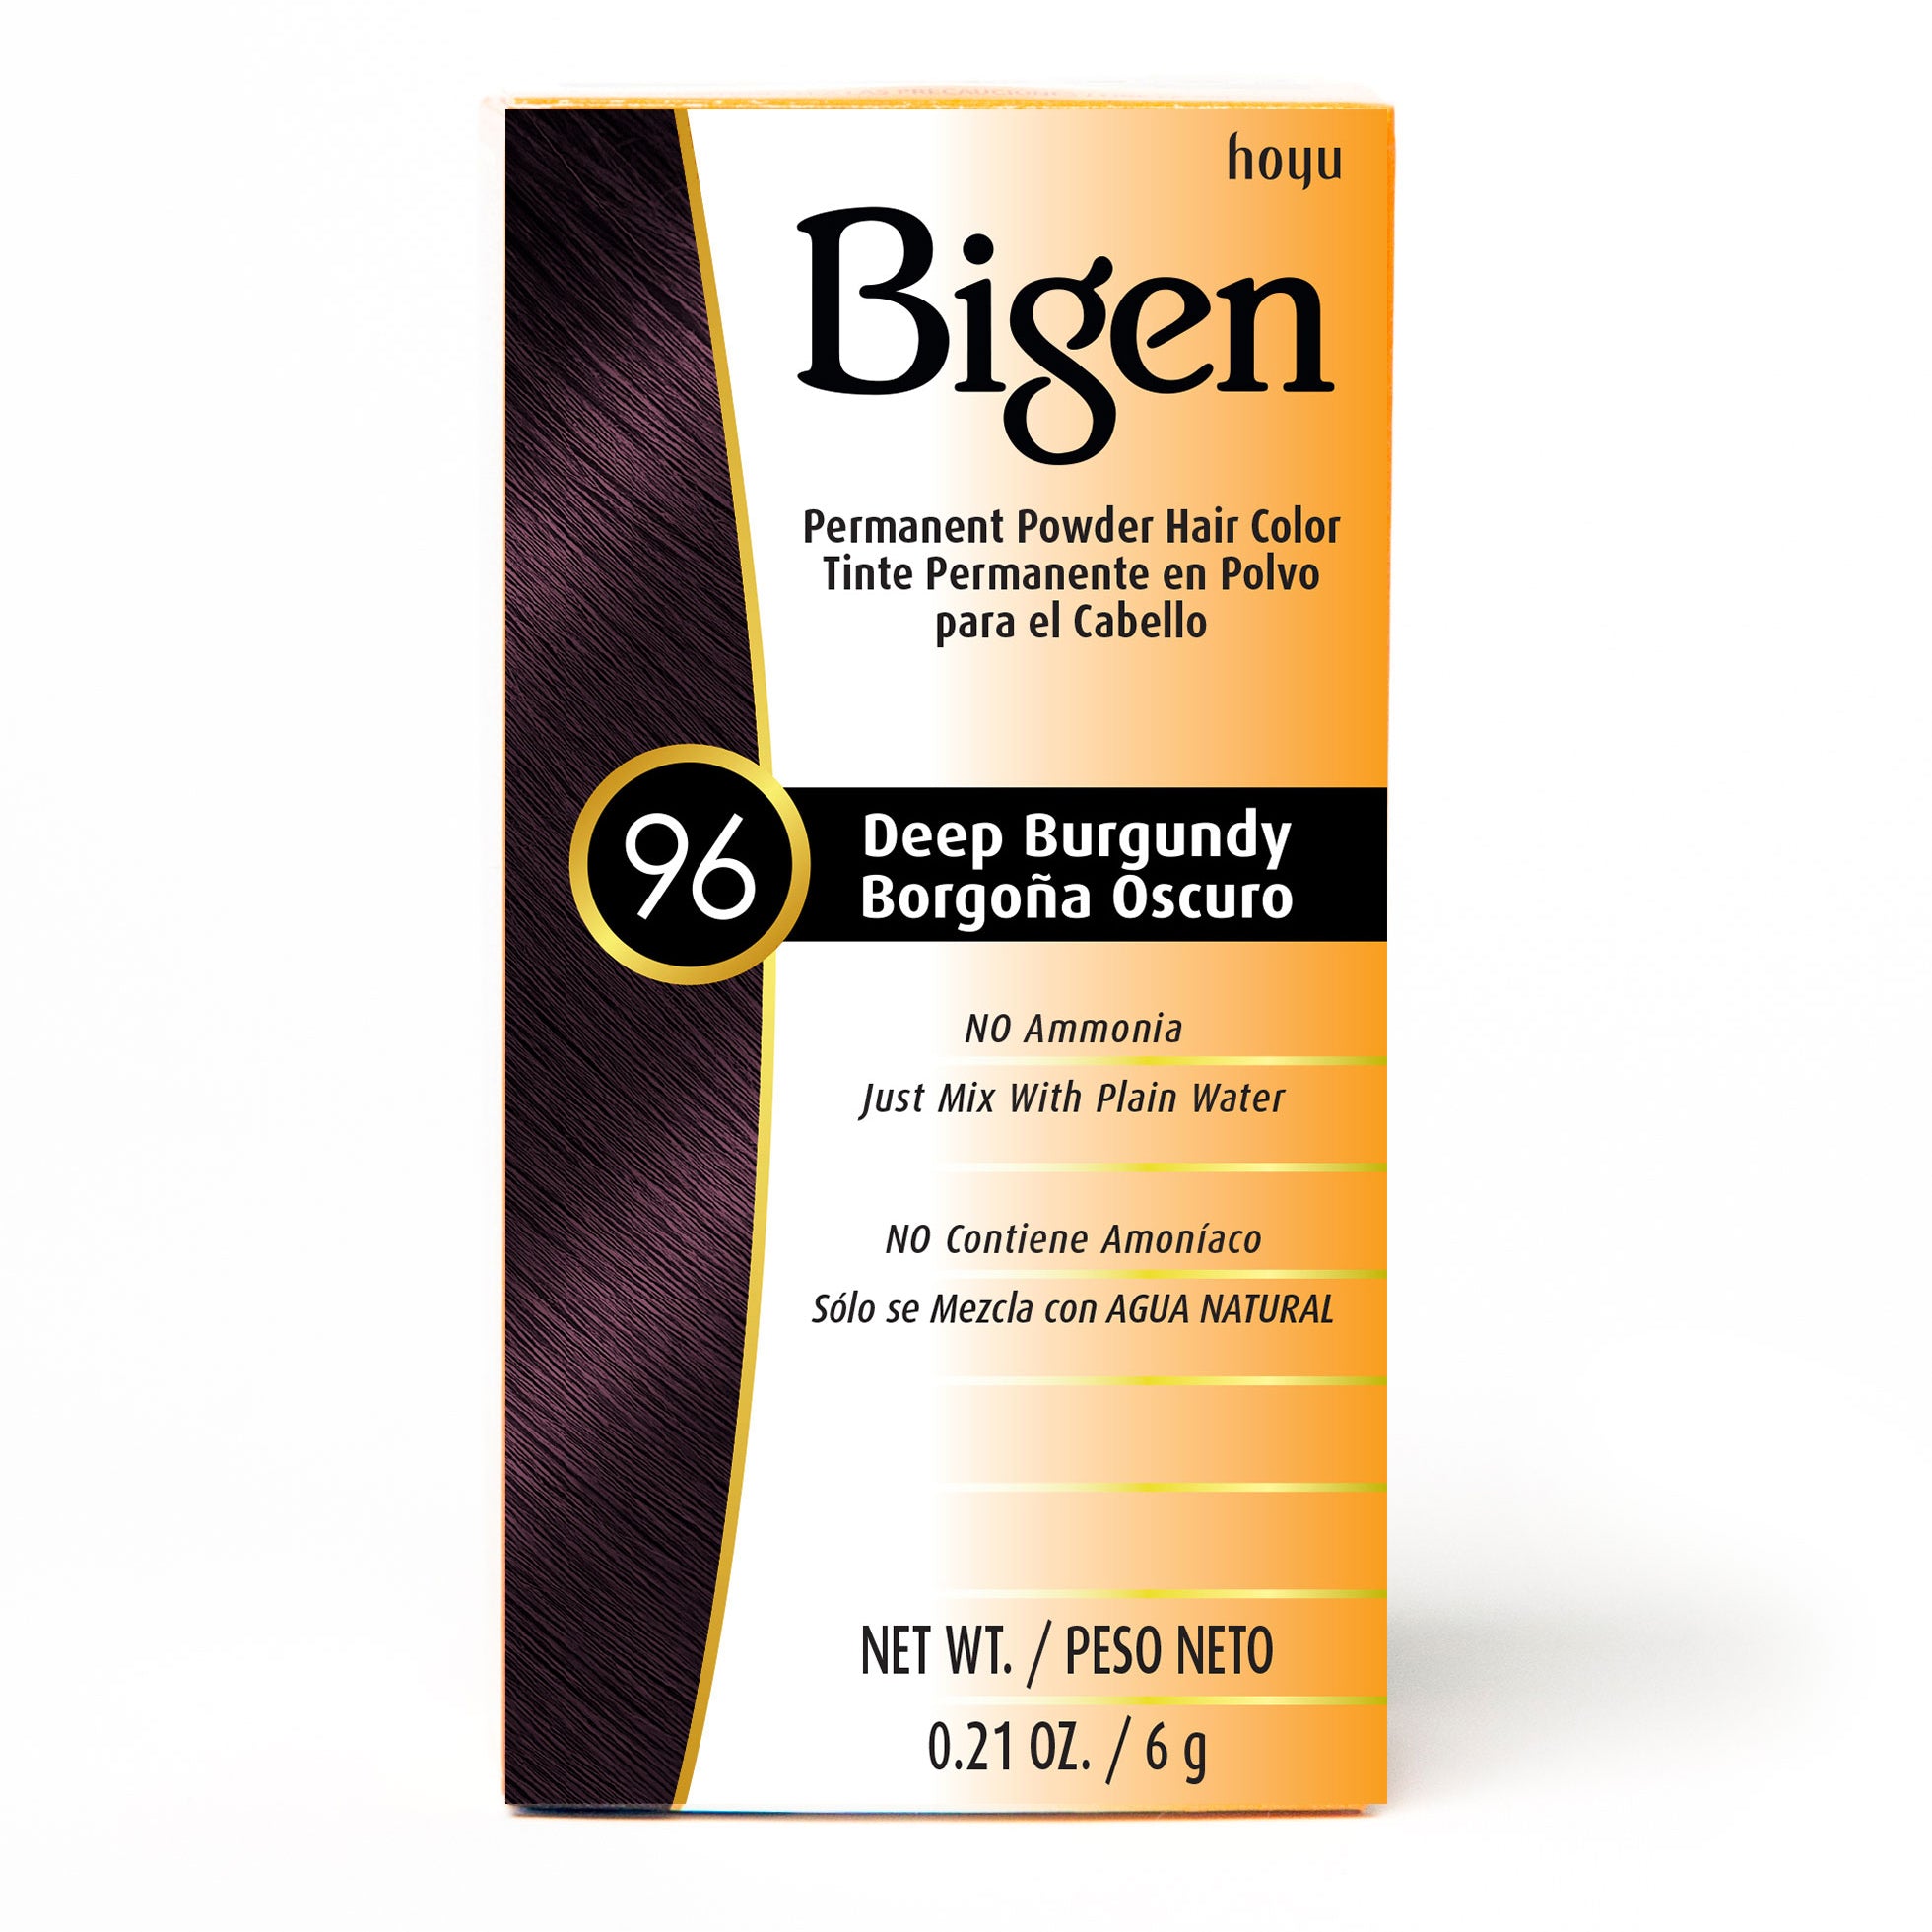 Bigen Permanent Powder Hair Color – 96 Deep Burgundy